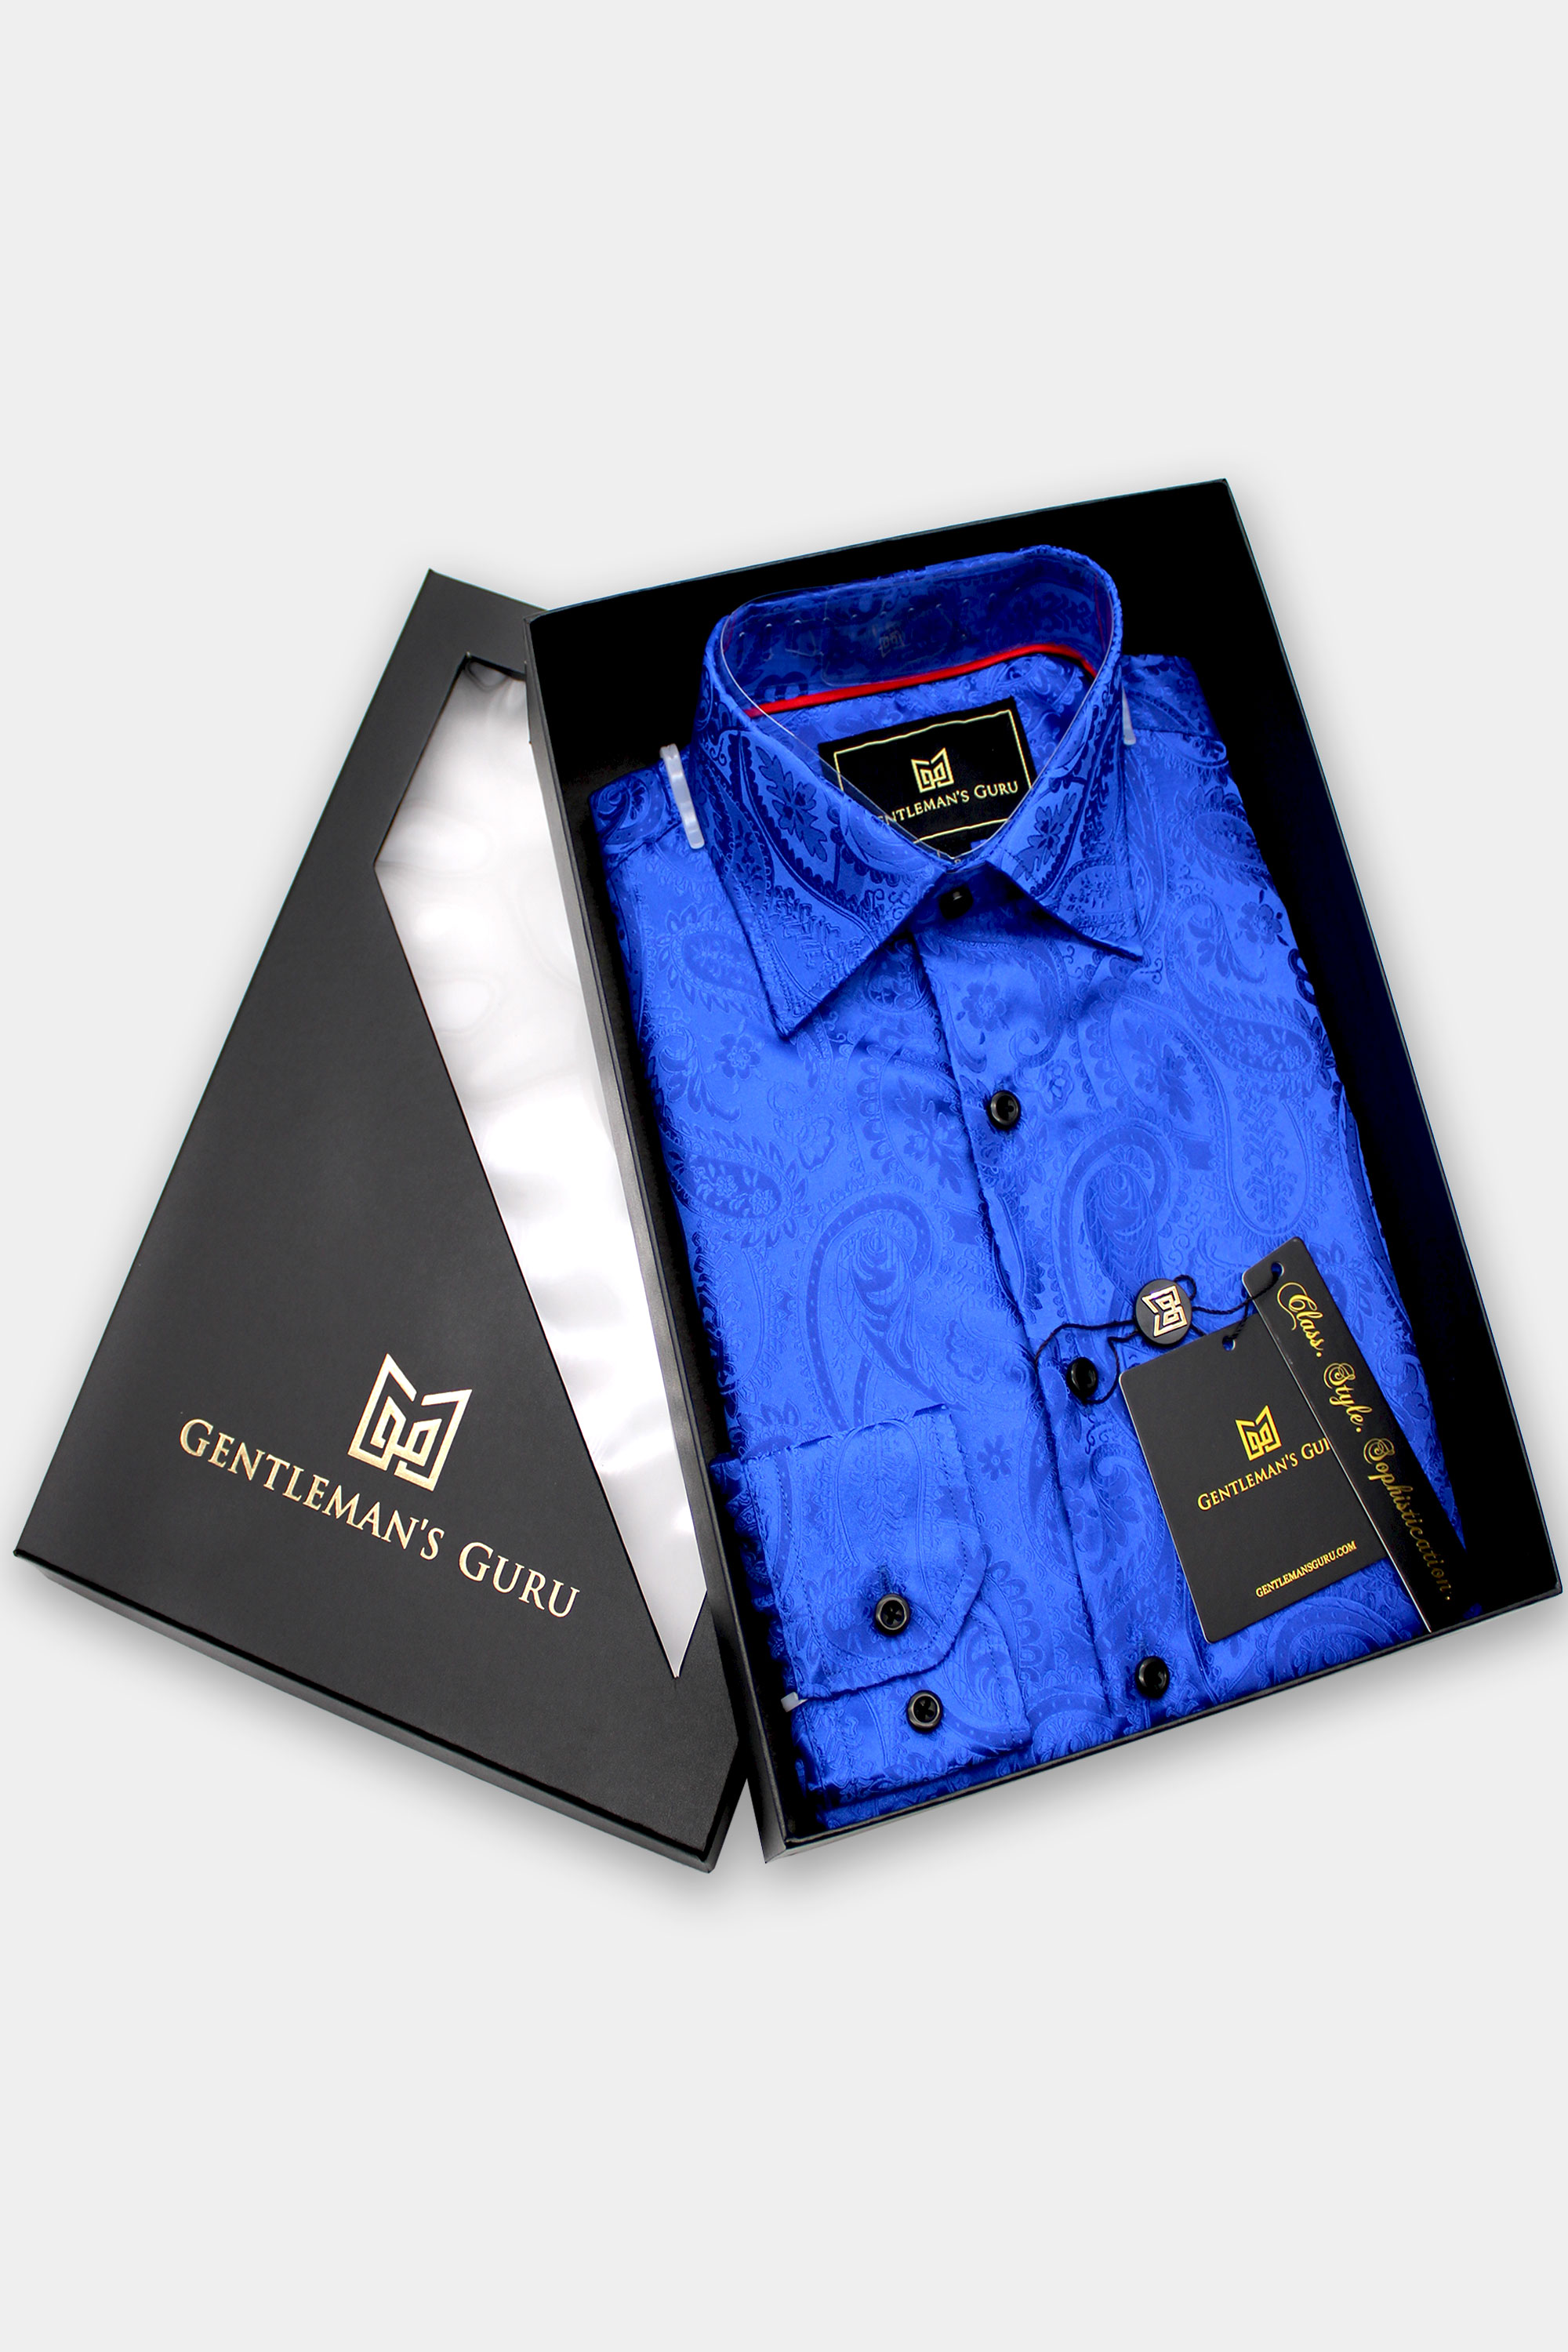 Mens-Royal-Blue-Paisley-Dress-Shirt-from-Gentlem